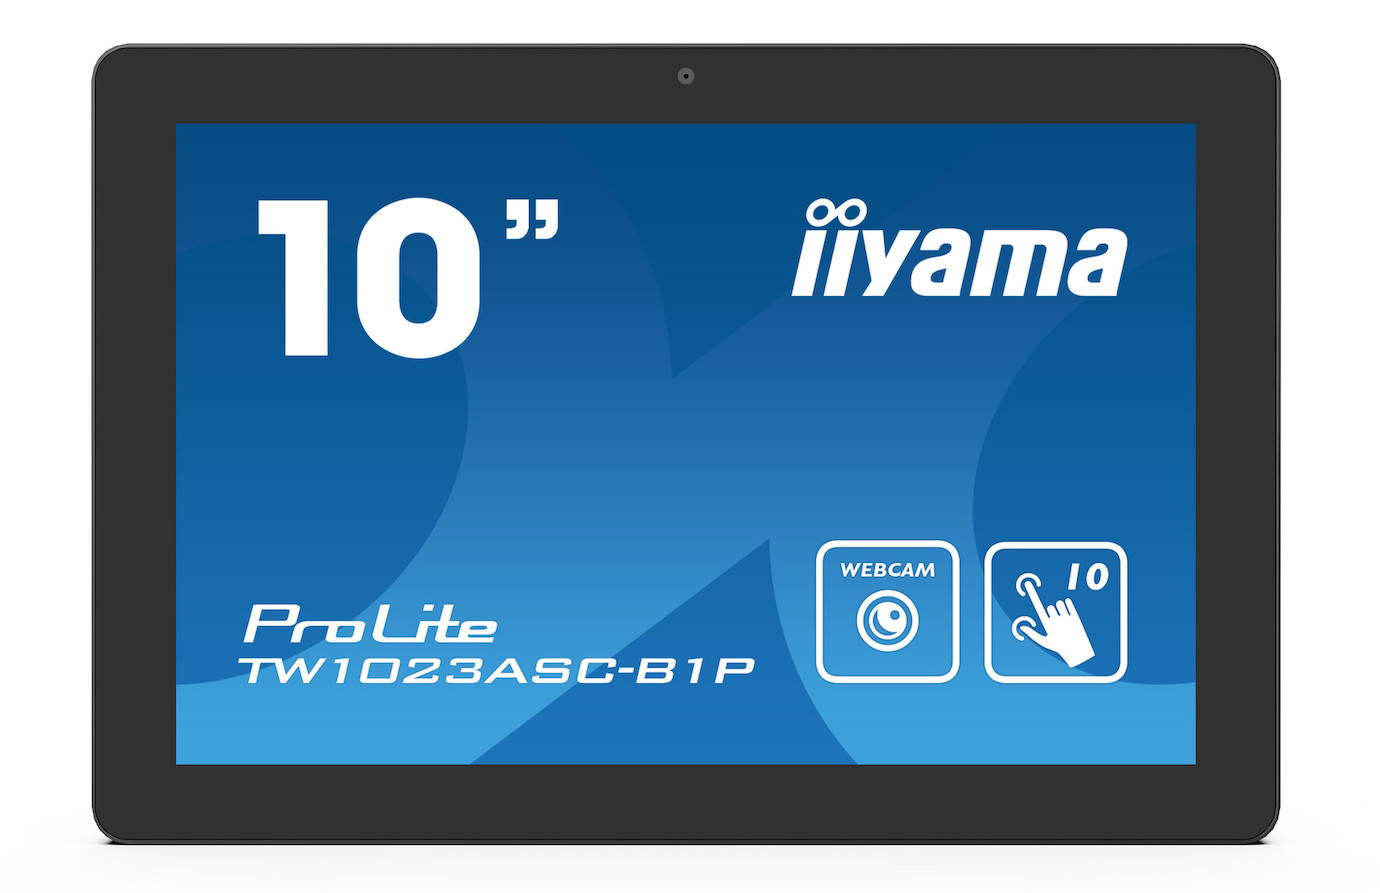 iiyama PROLITE TW1023ASC-B1P 10'' Touchmonitor mit 25ms und WXGA